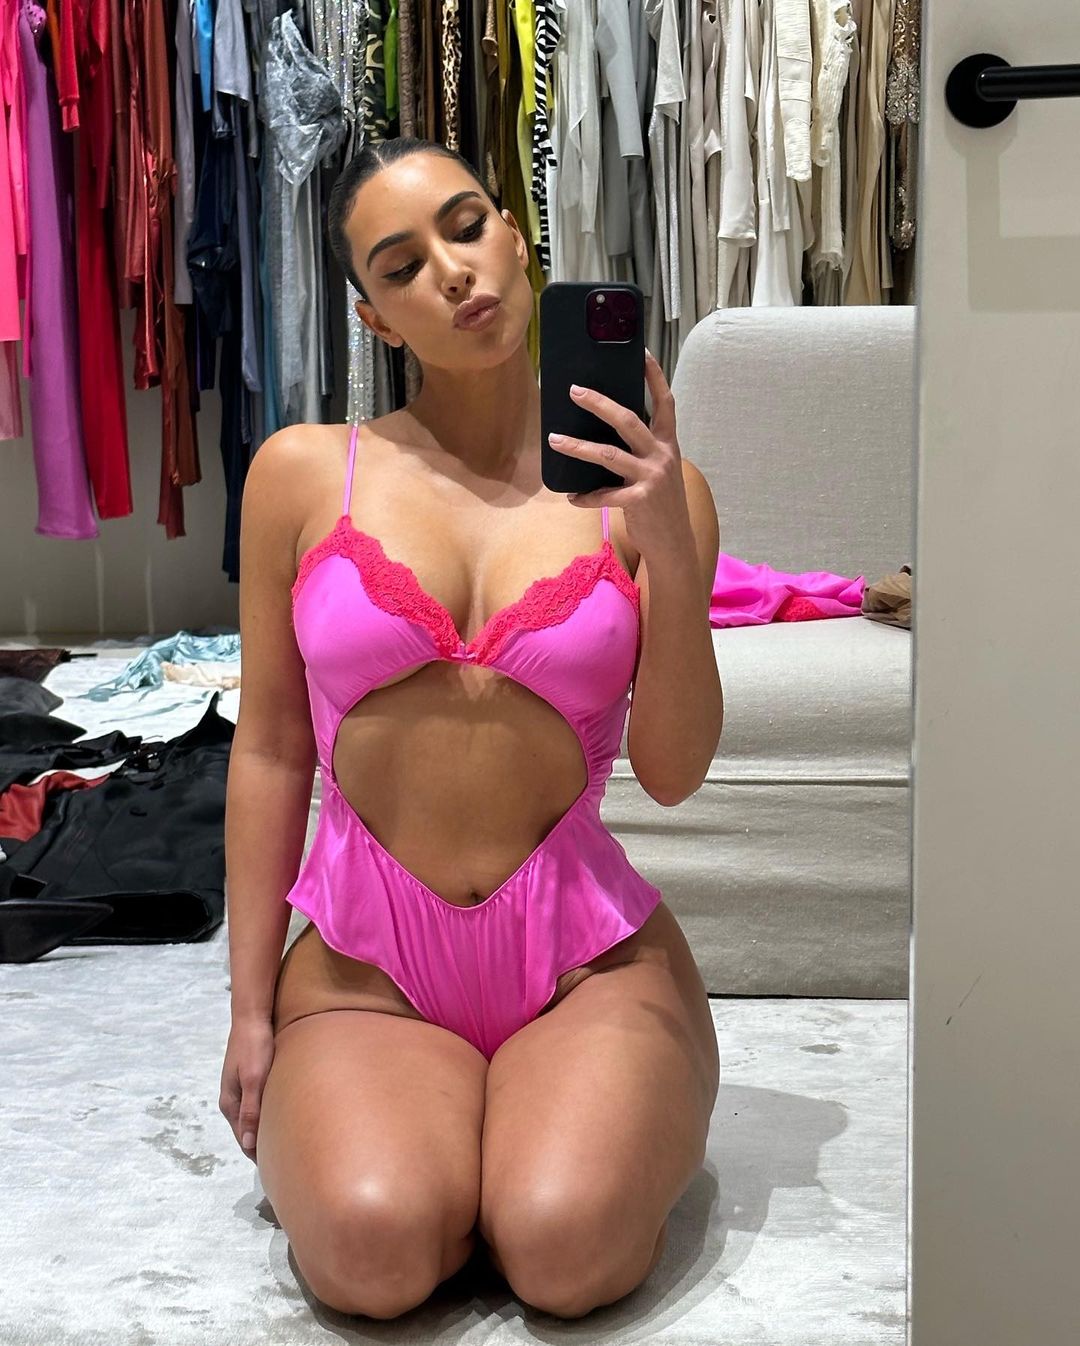 Kim Kardashian promotes SKIMS Brand Pink Color Bikini Shares Photos Her Instagram, Feb 2023